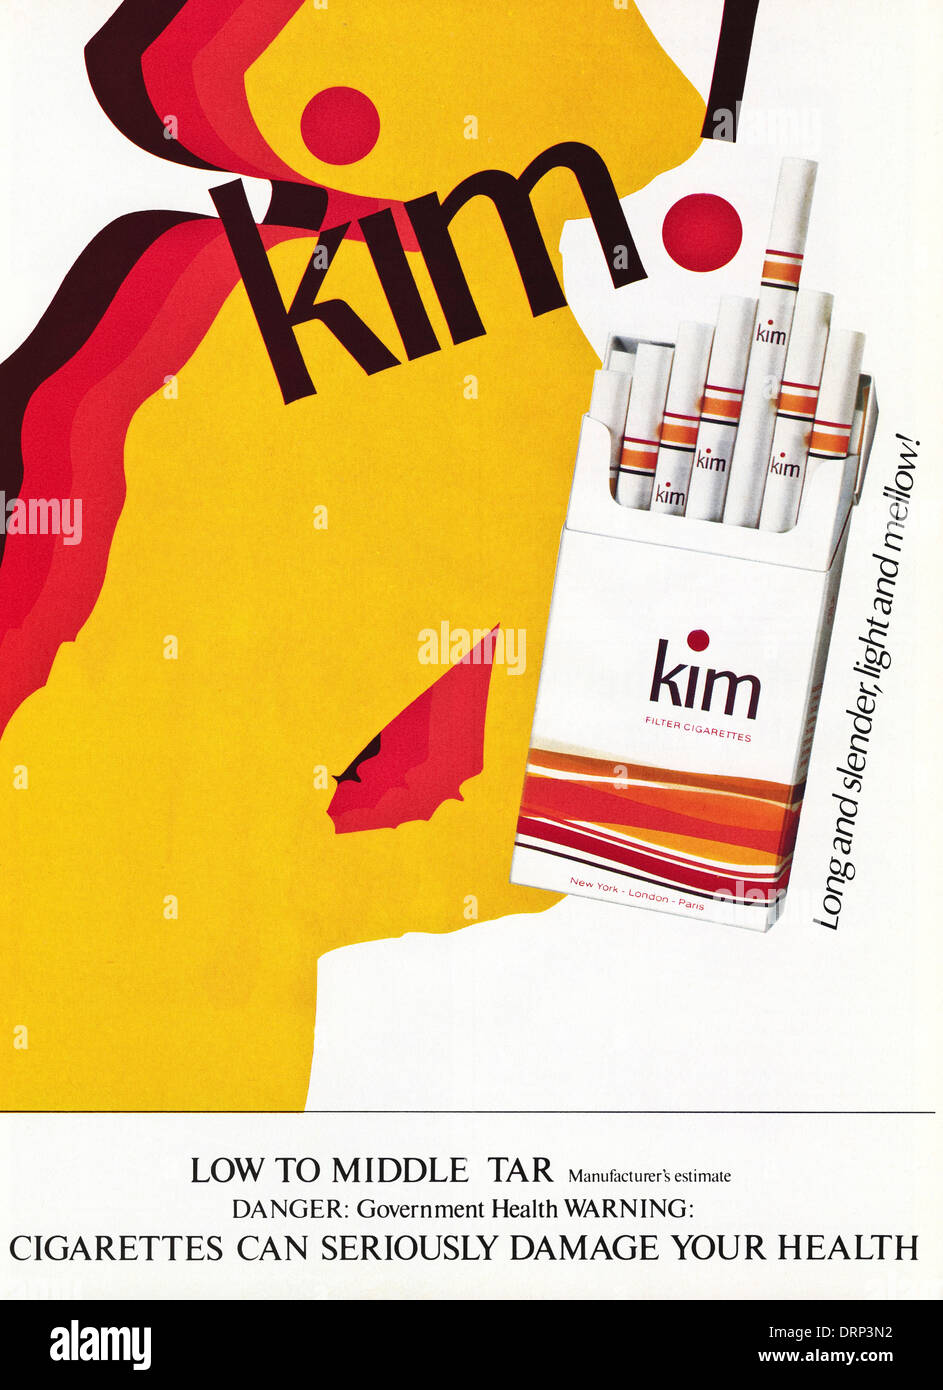 KIM ULTRA SLIM Filter Cigarettes - 1990 Vintage Print Ad